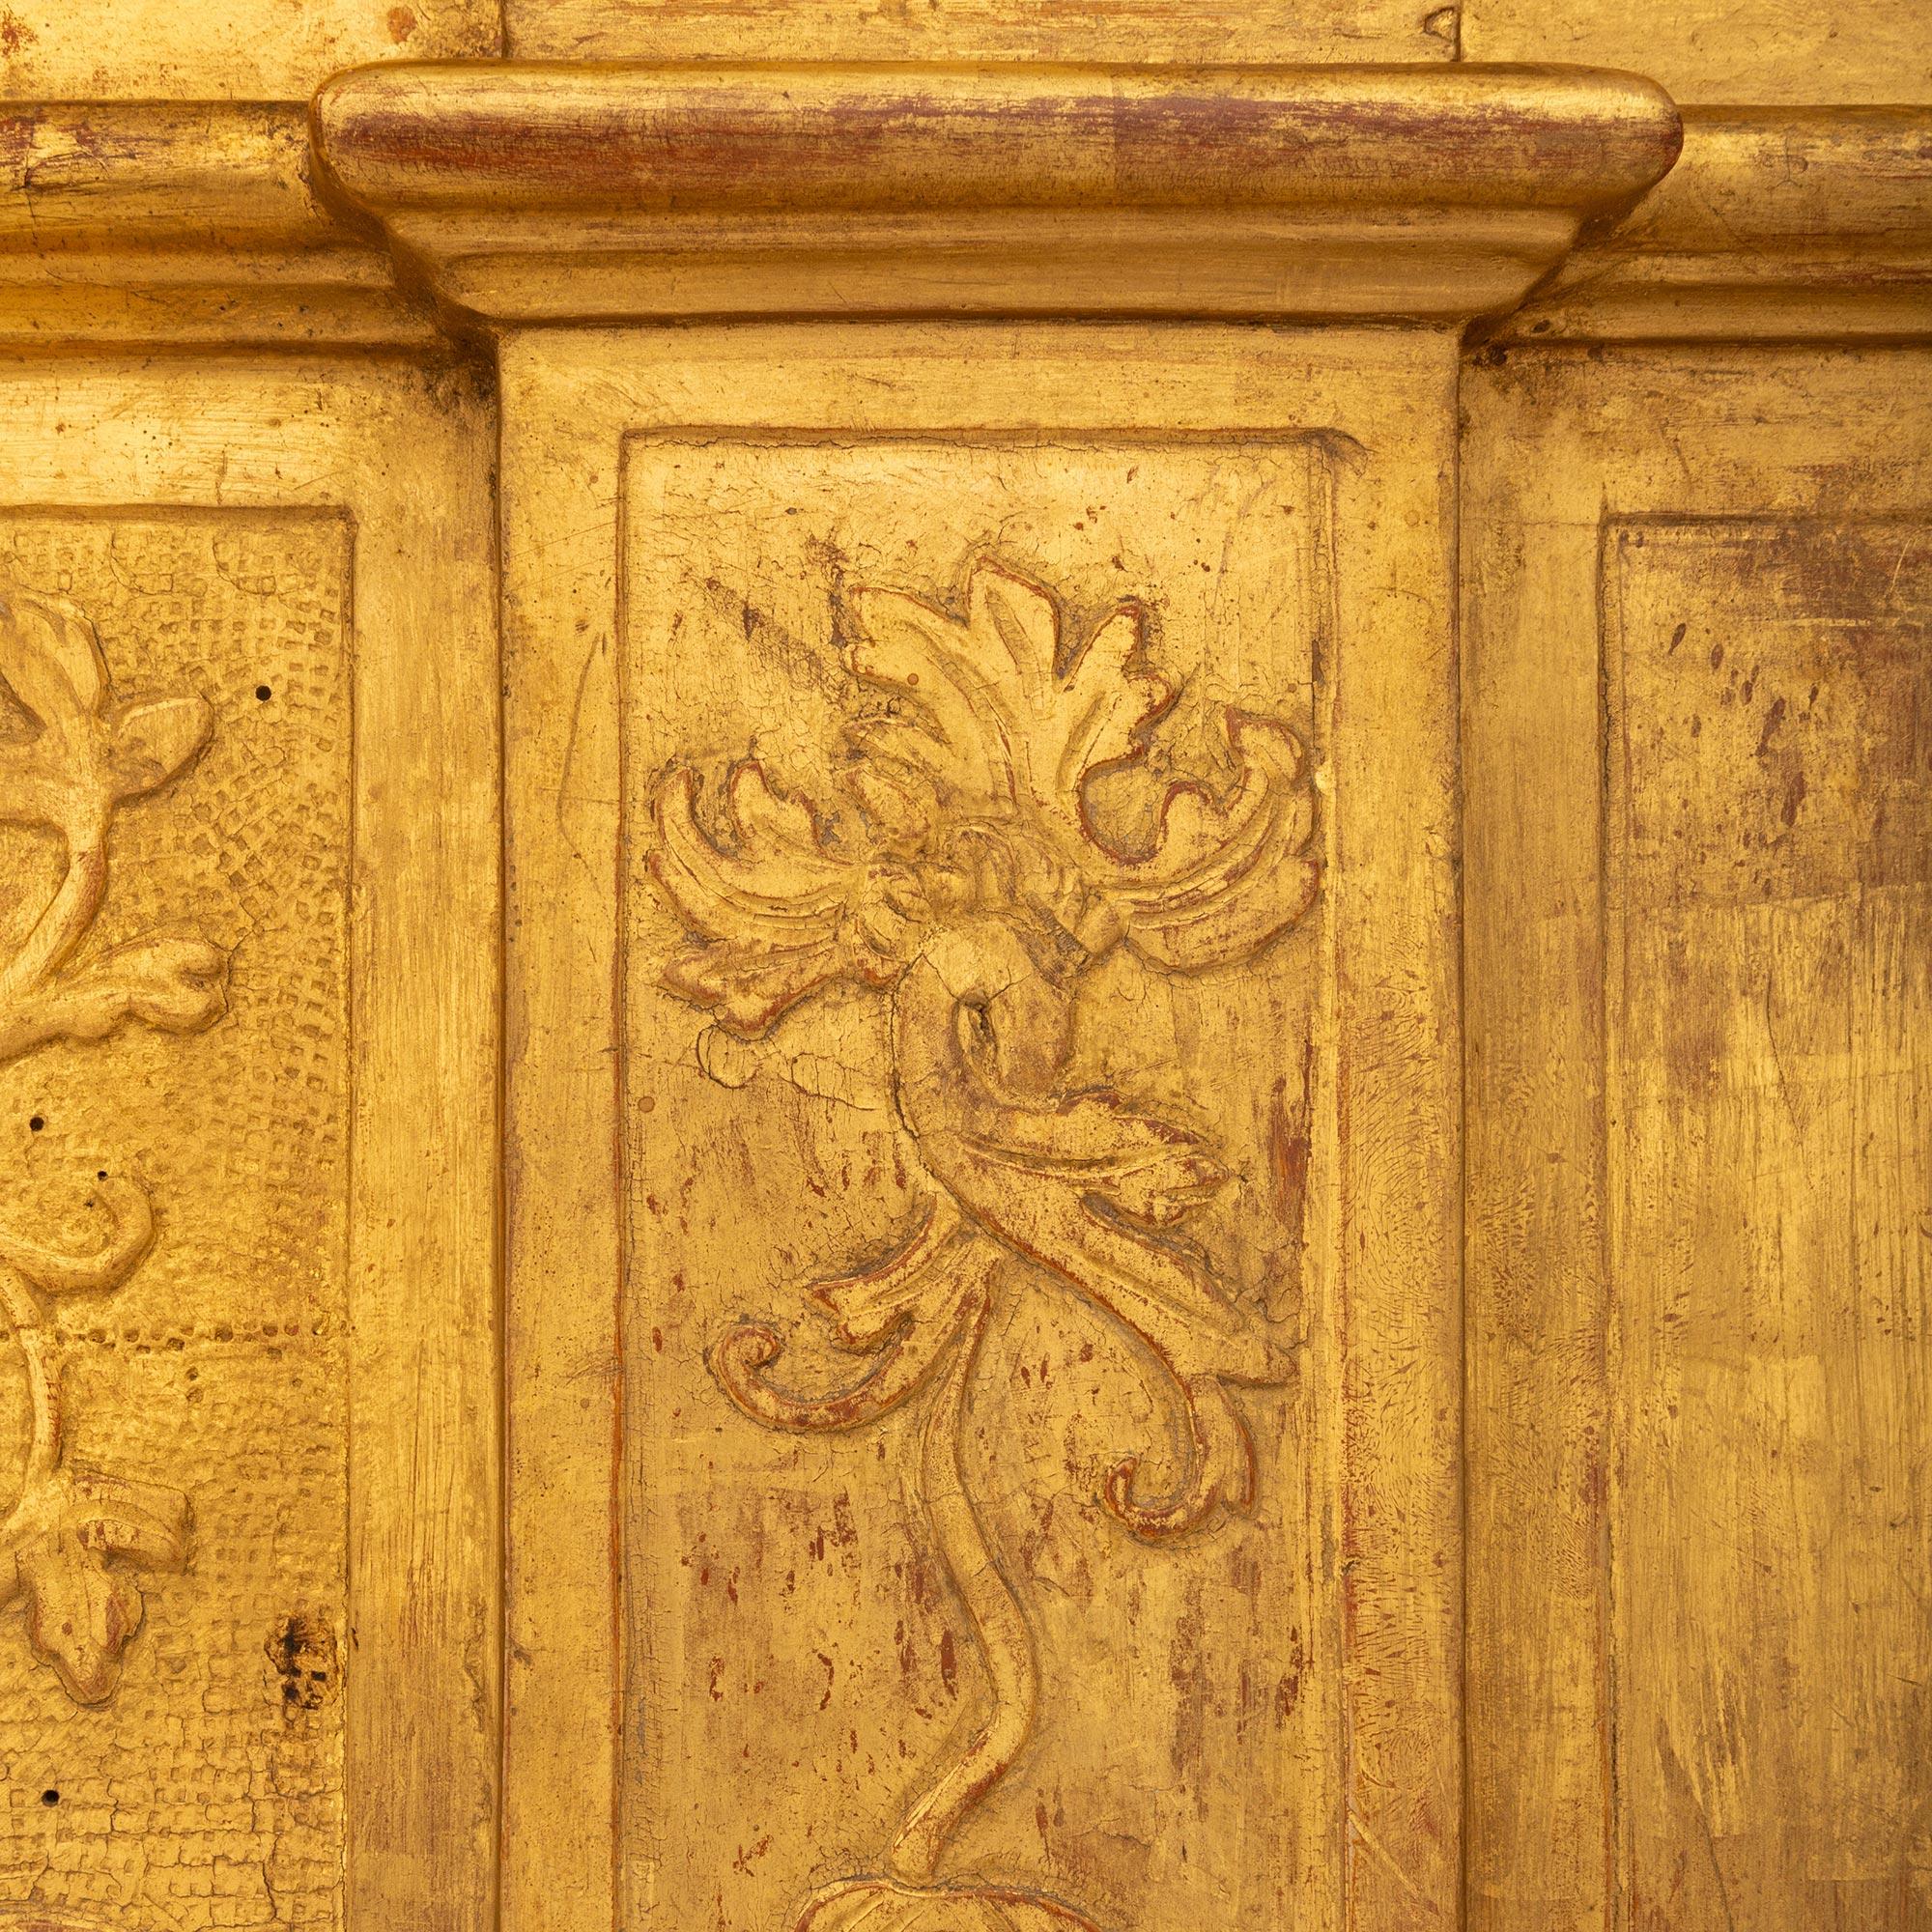 Italian 18th Century Baroque Period Giltwood Wall Decor Panel For Sale 1